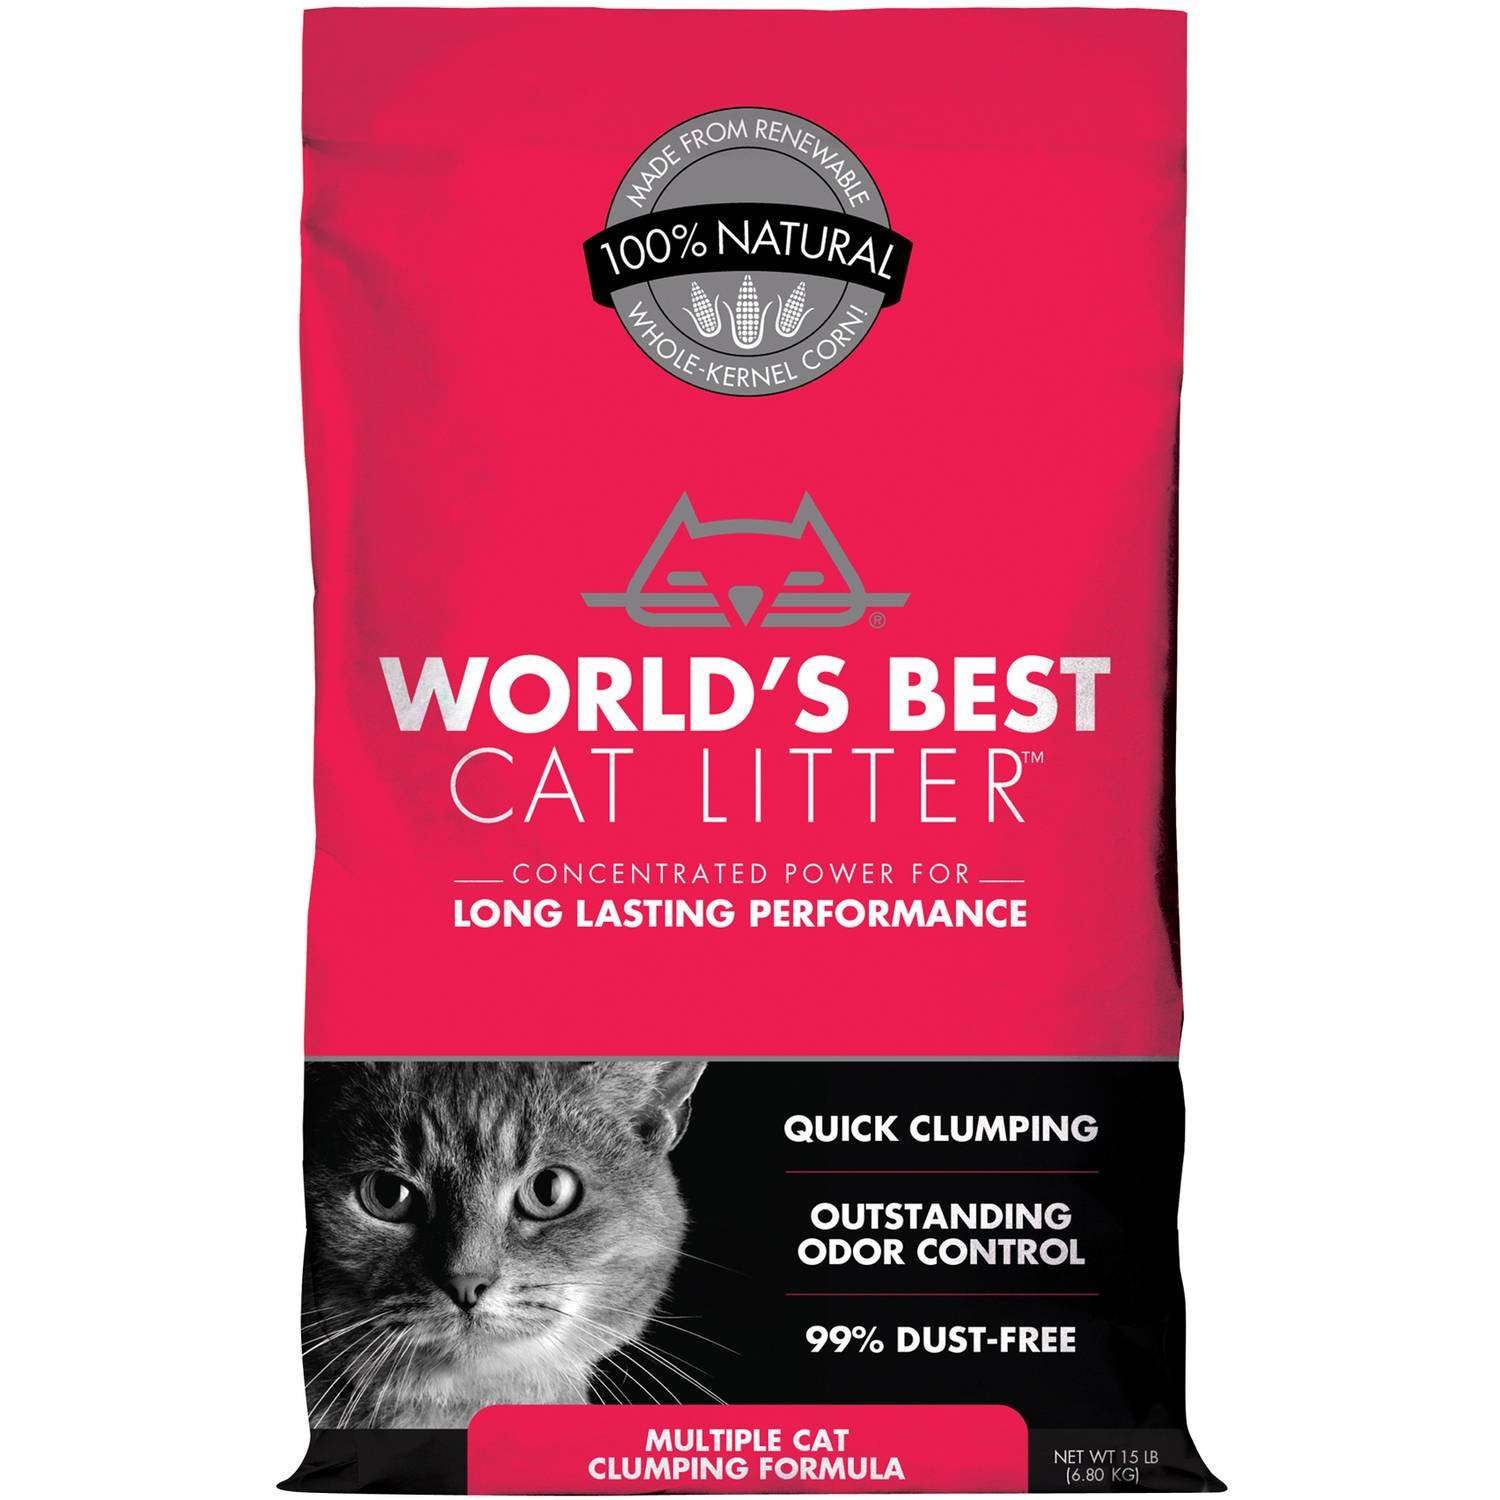 Best Cat Litter for Odor Control 2017